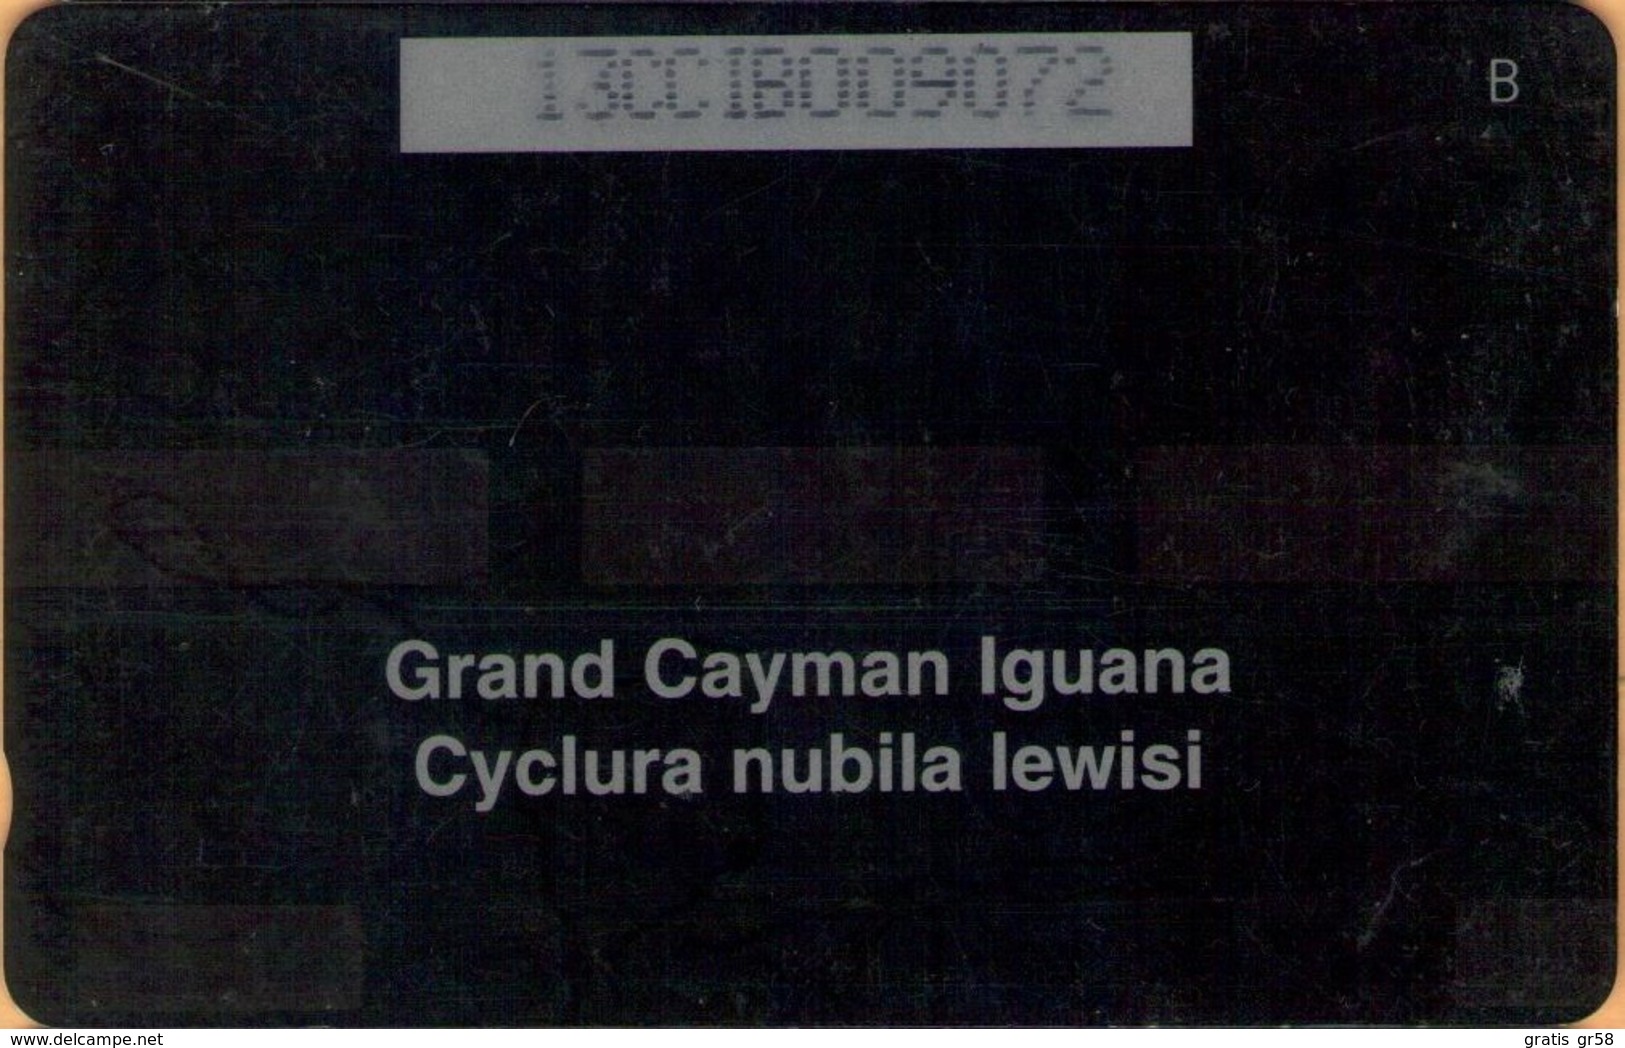 Cayman Island - CAY-13B, GPT, 13CCIB, Cayman Iguana, 10 $, 25.000ex, 1995, Used - Iles Cayman